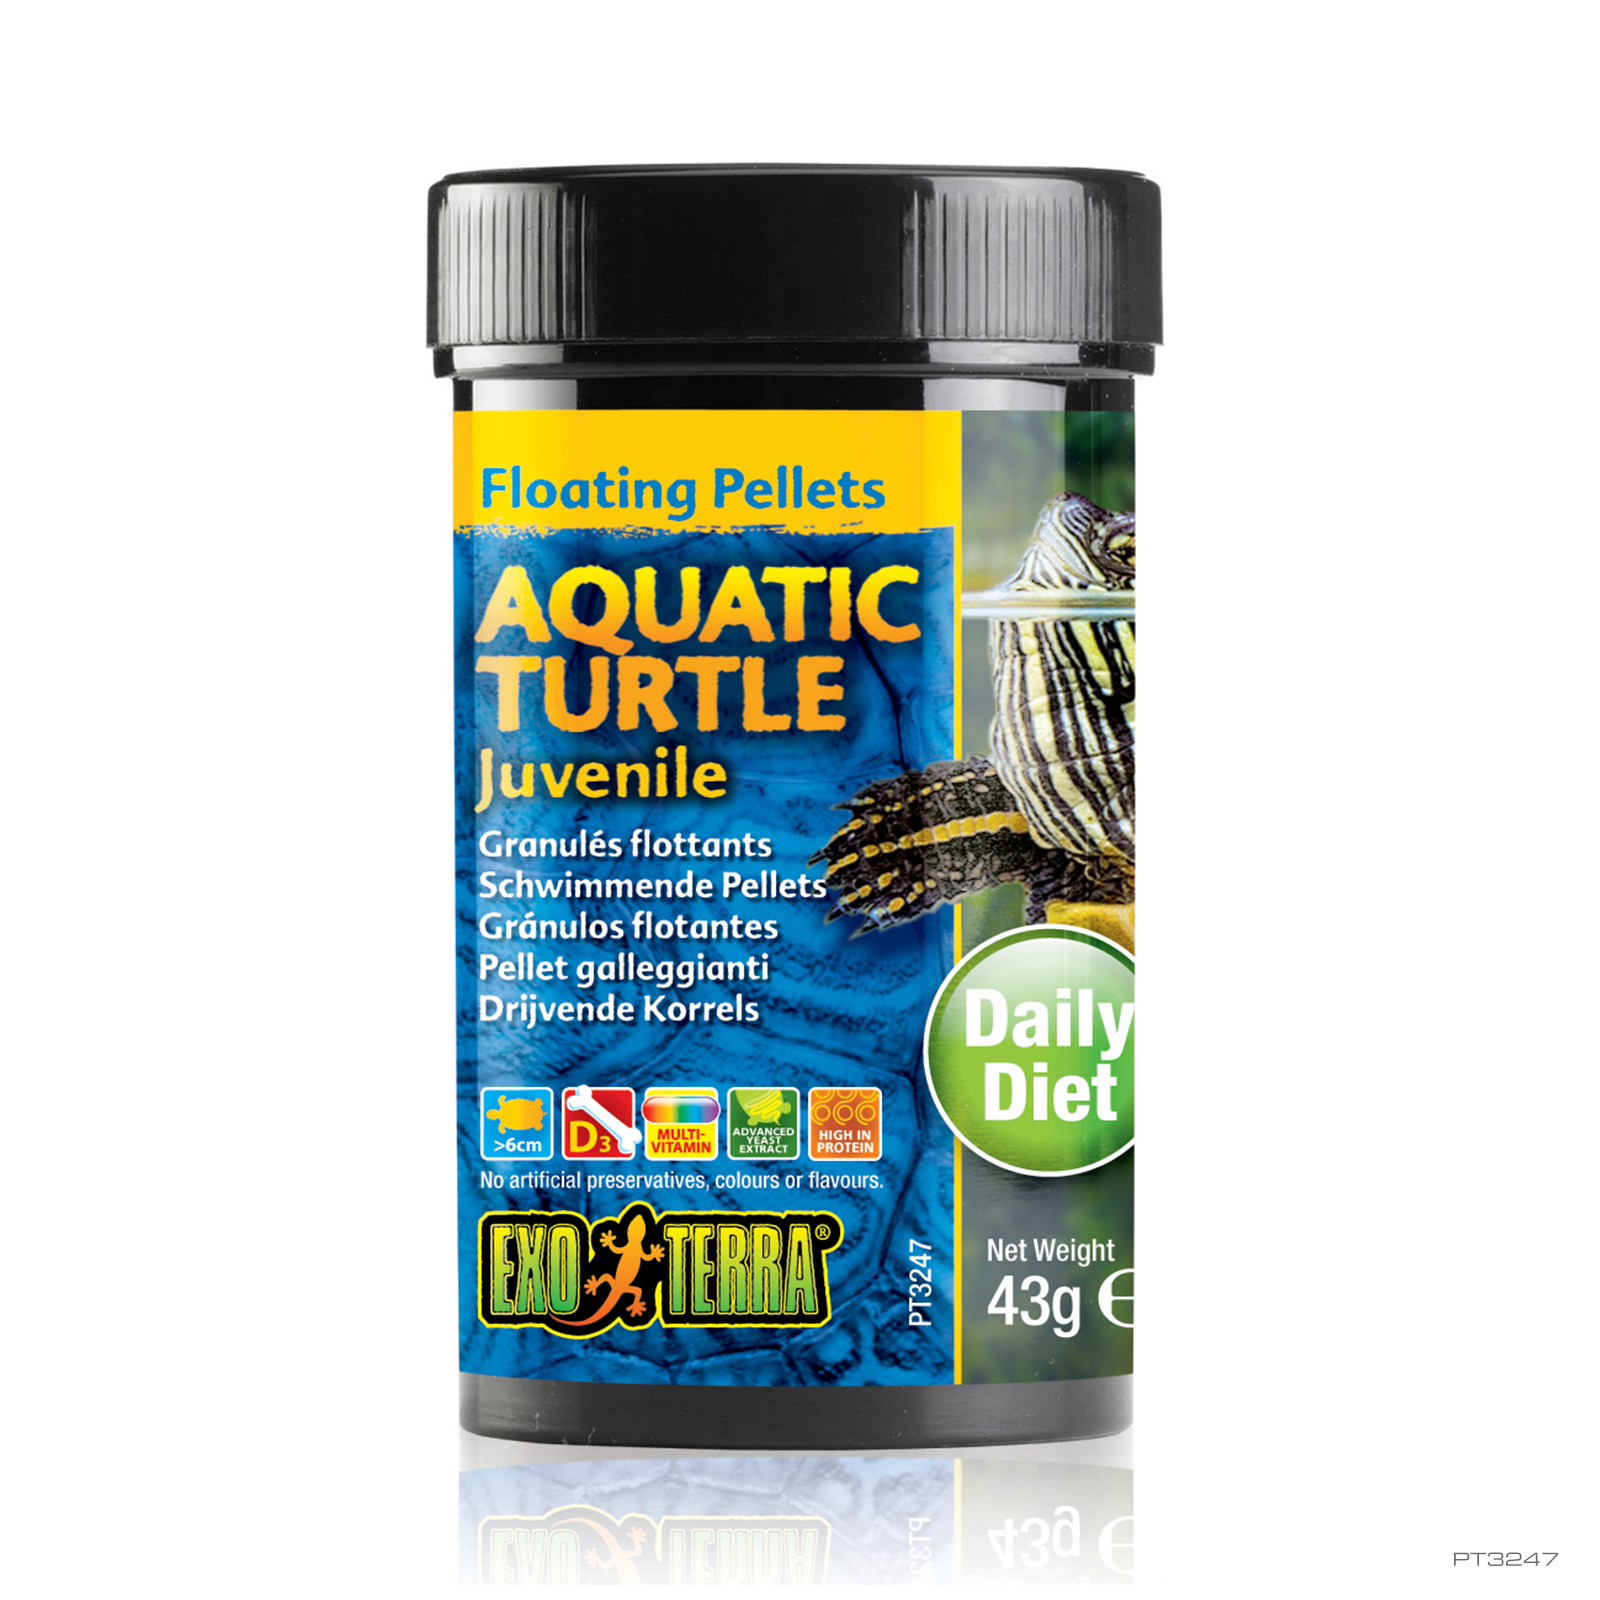 Floating Pellets Aquatic Turtle Juvenile 1.5 oz - 43 g